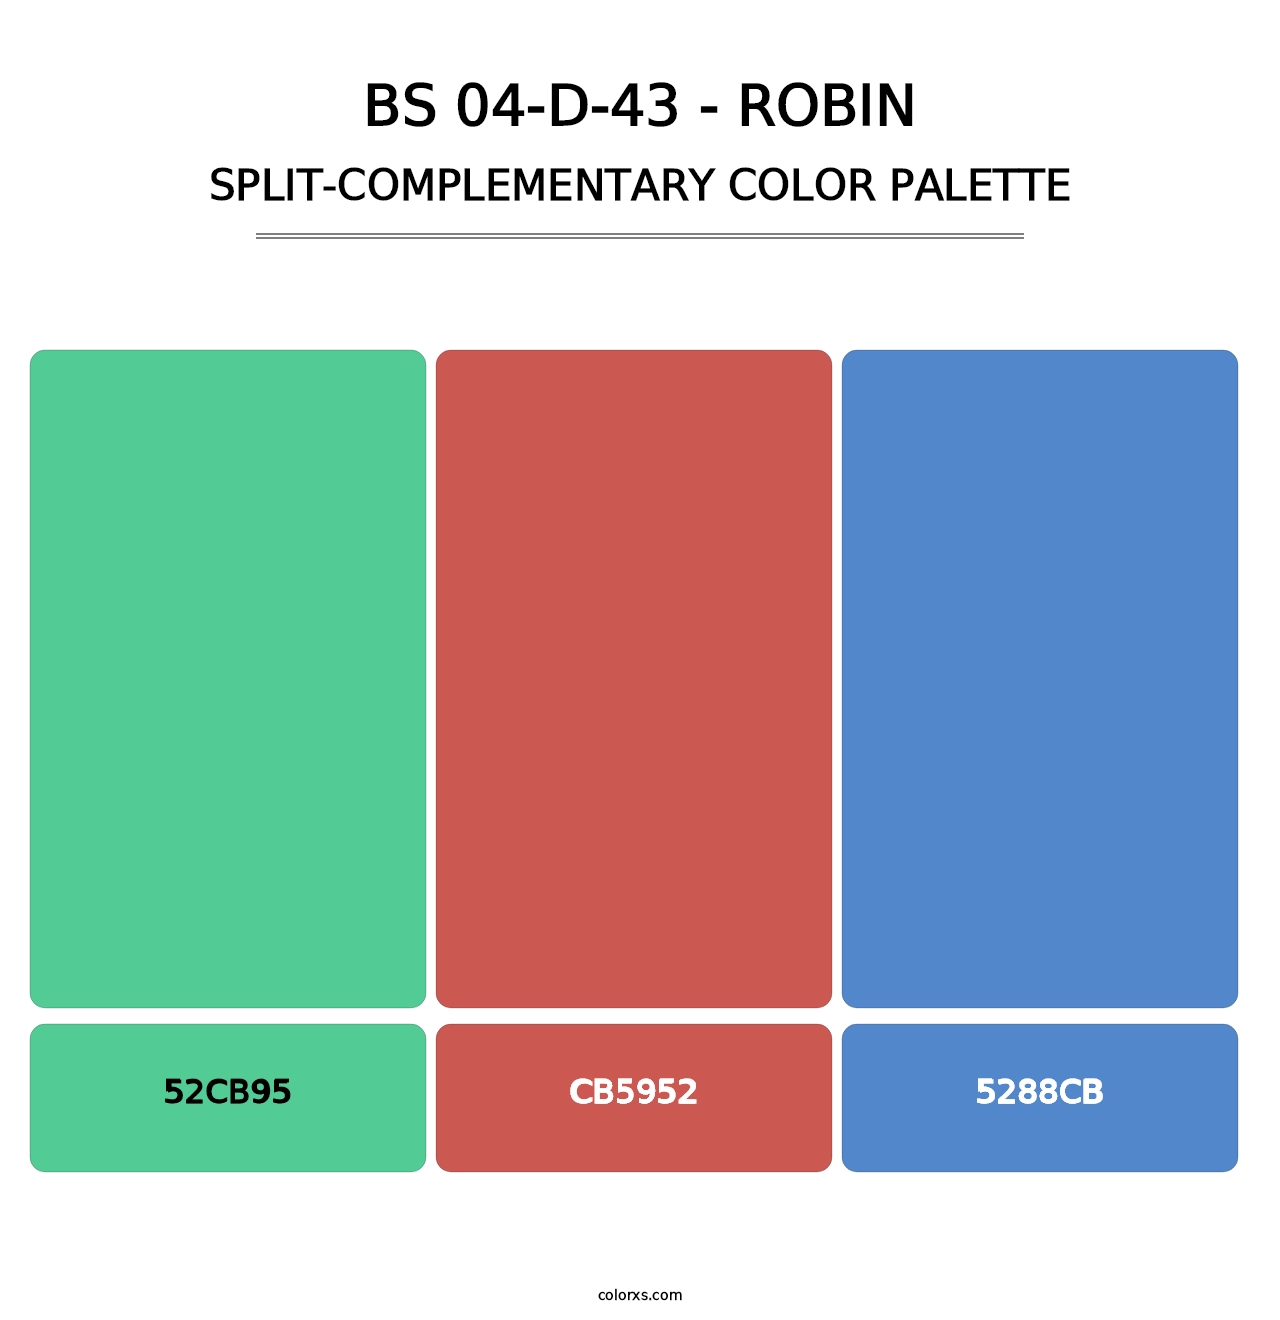 BS 04-D-43 - Robin - Split-Complementary Color Palette